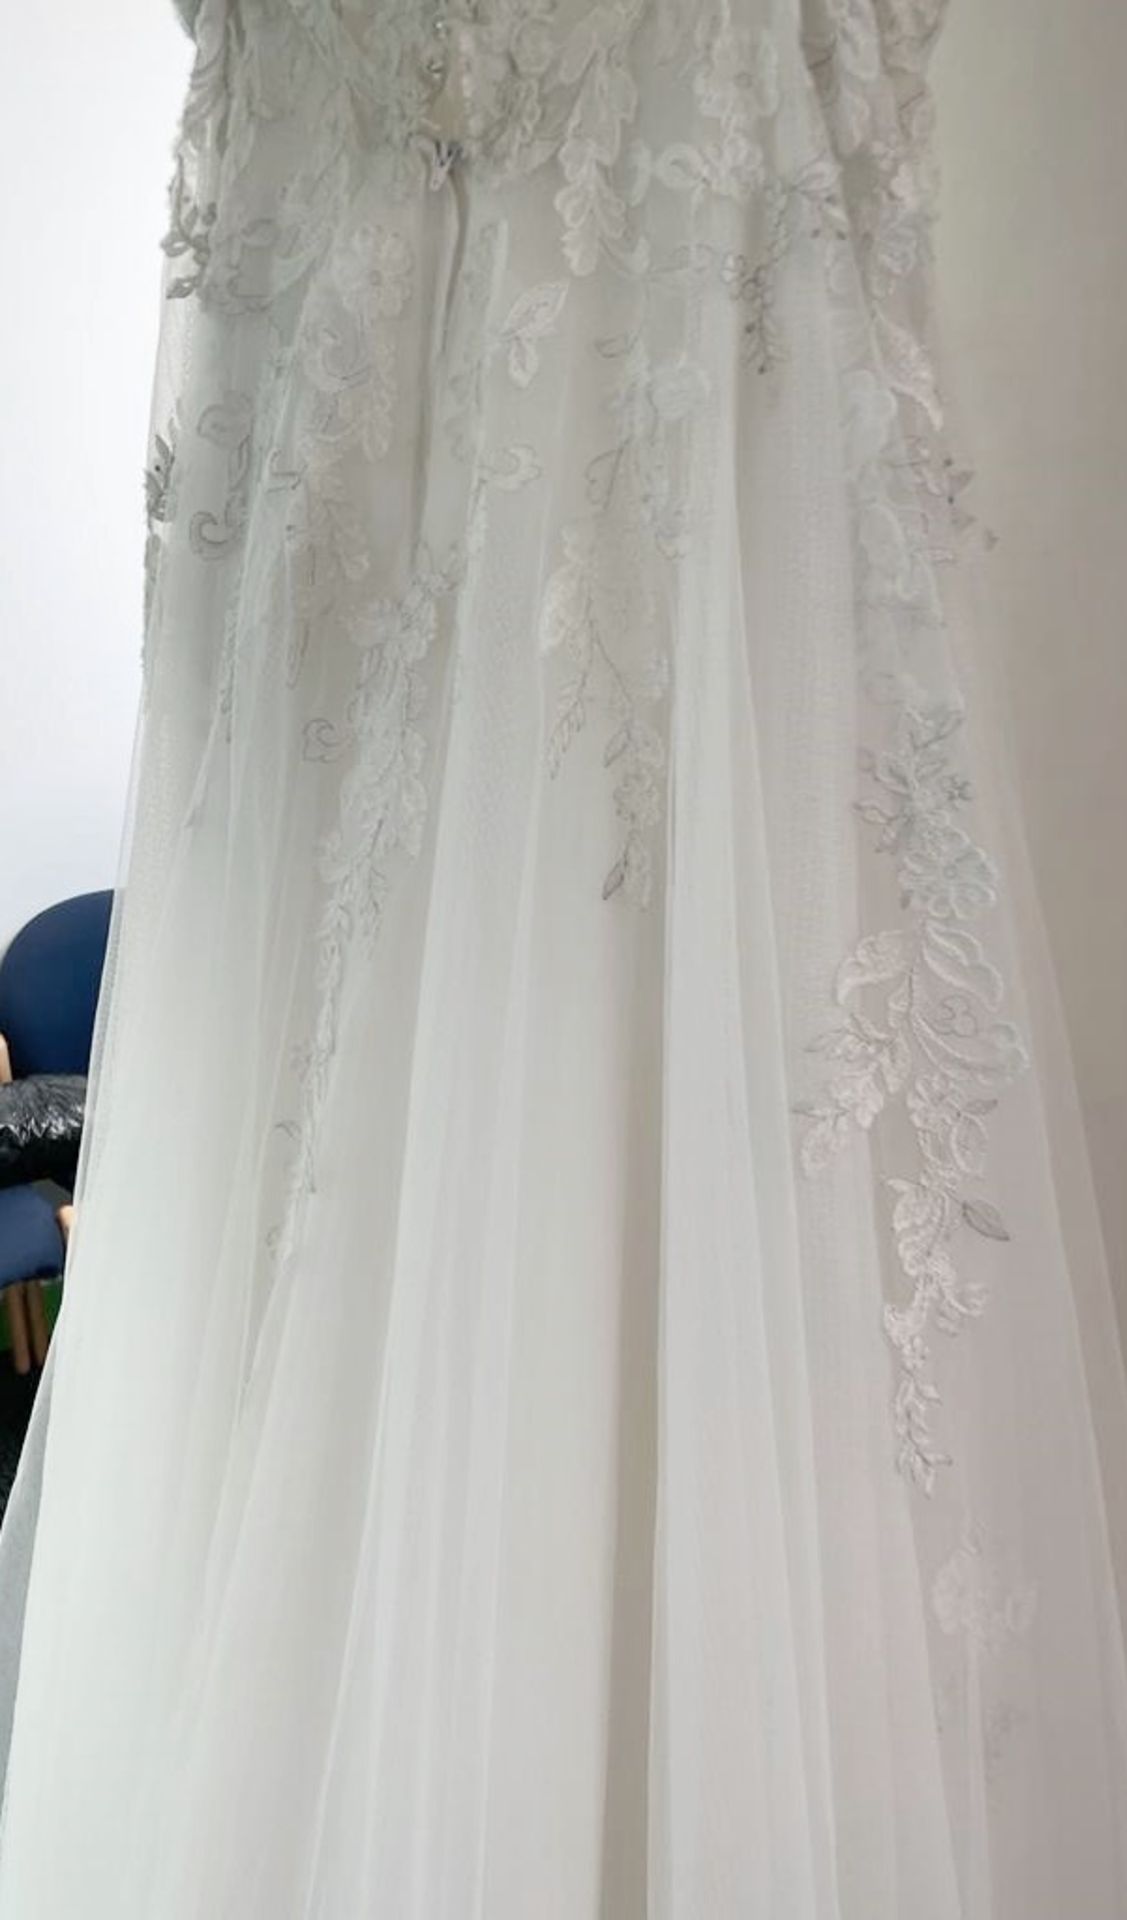 1 x REBECCA INGRAM 'Camille' Designer Wedding Dress Bridal Gown - Size: UK 10 - Original RRP £1,450 - Image 10 of 15